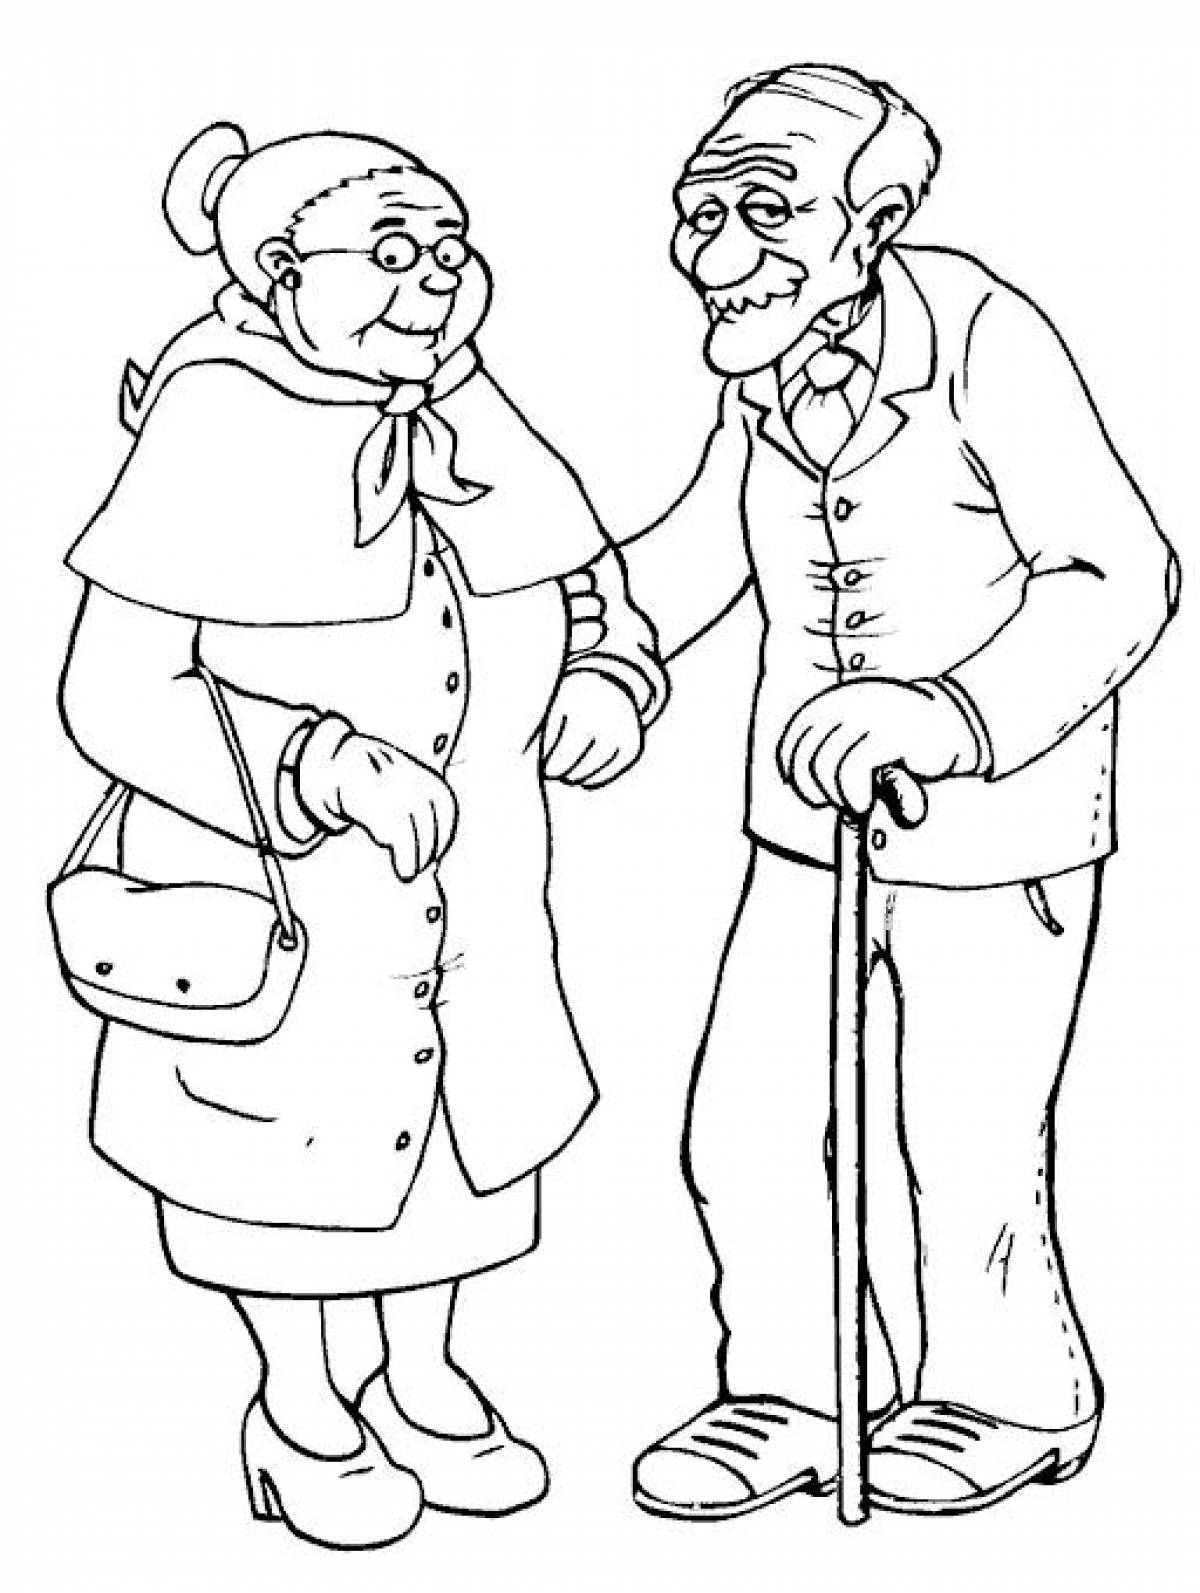 Grandmother and grandfather